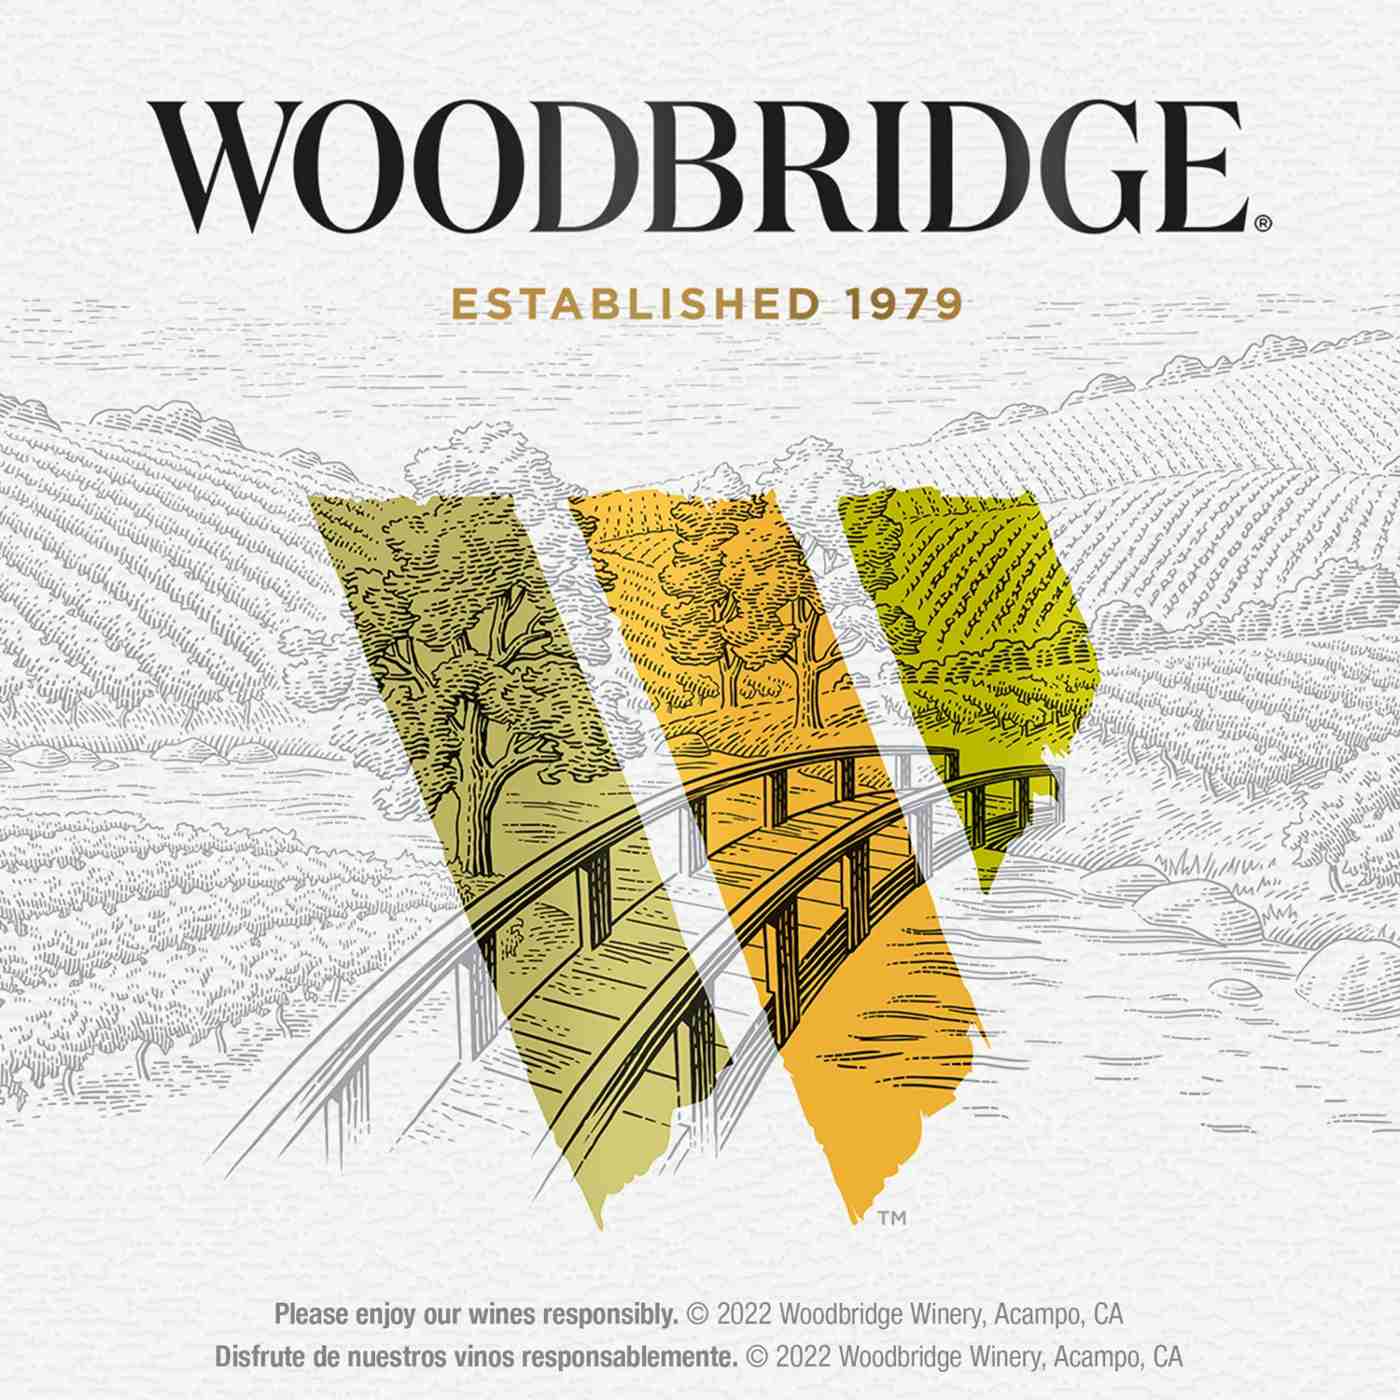 Woodbridge Chardonnay White Wine 187 mL Cans, 4 pk; image 5 of 11